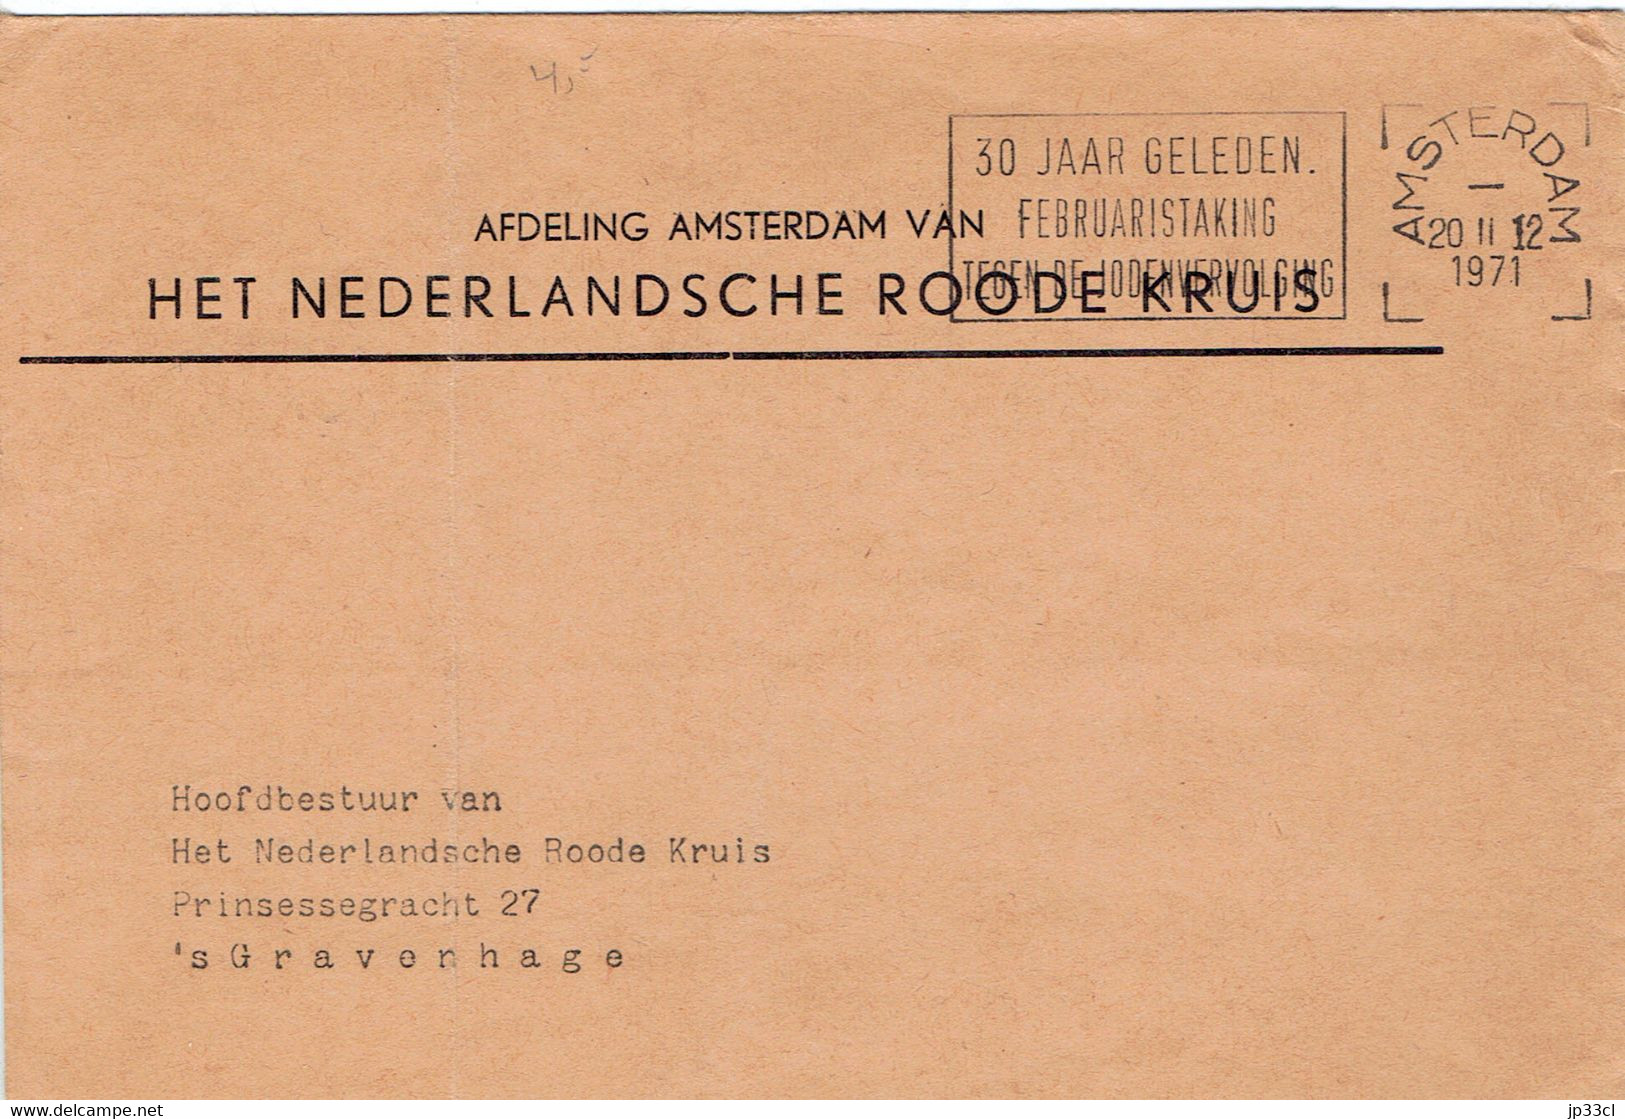 Judaïsme Croix Rouge Rode Kruis Stempel 30 Jaar Geleden Februaristaking Tegen De Jodenvervolging, Amsterdam 20/2/1971 - Macchine Per Obliterare (EMA)